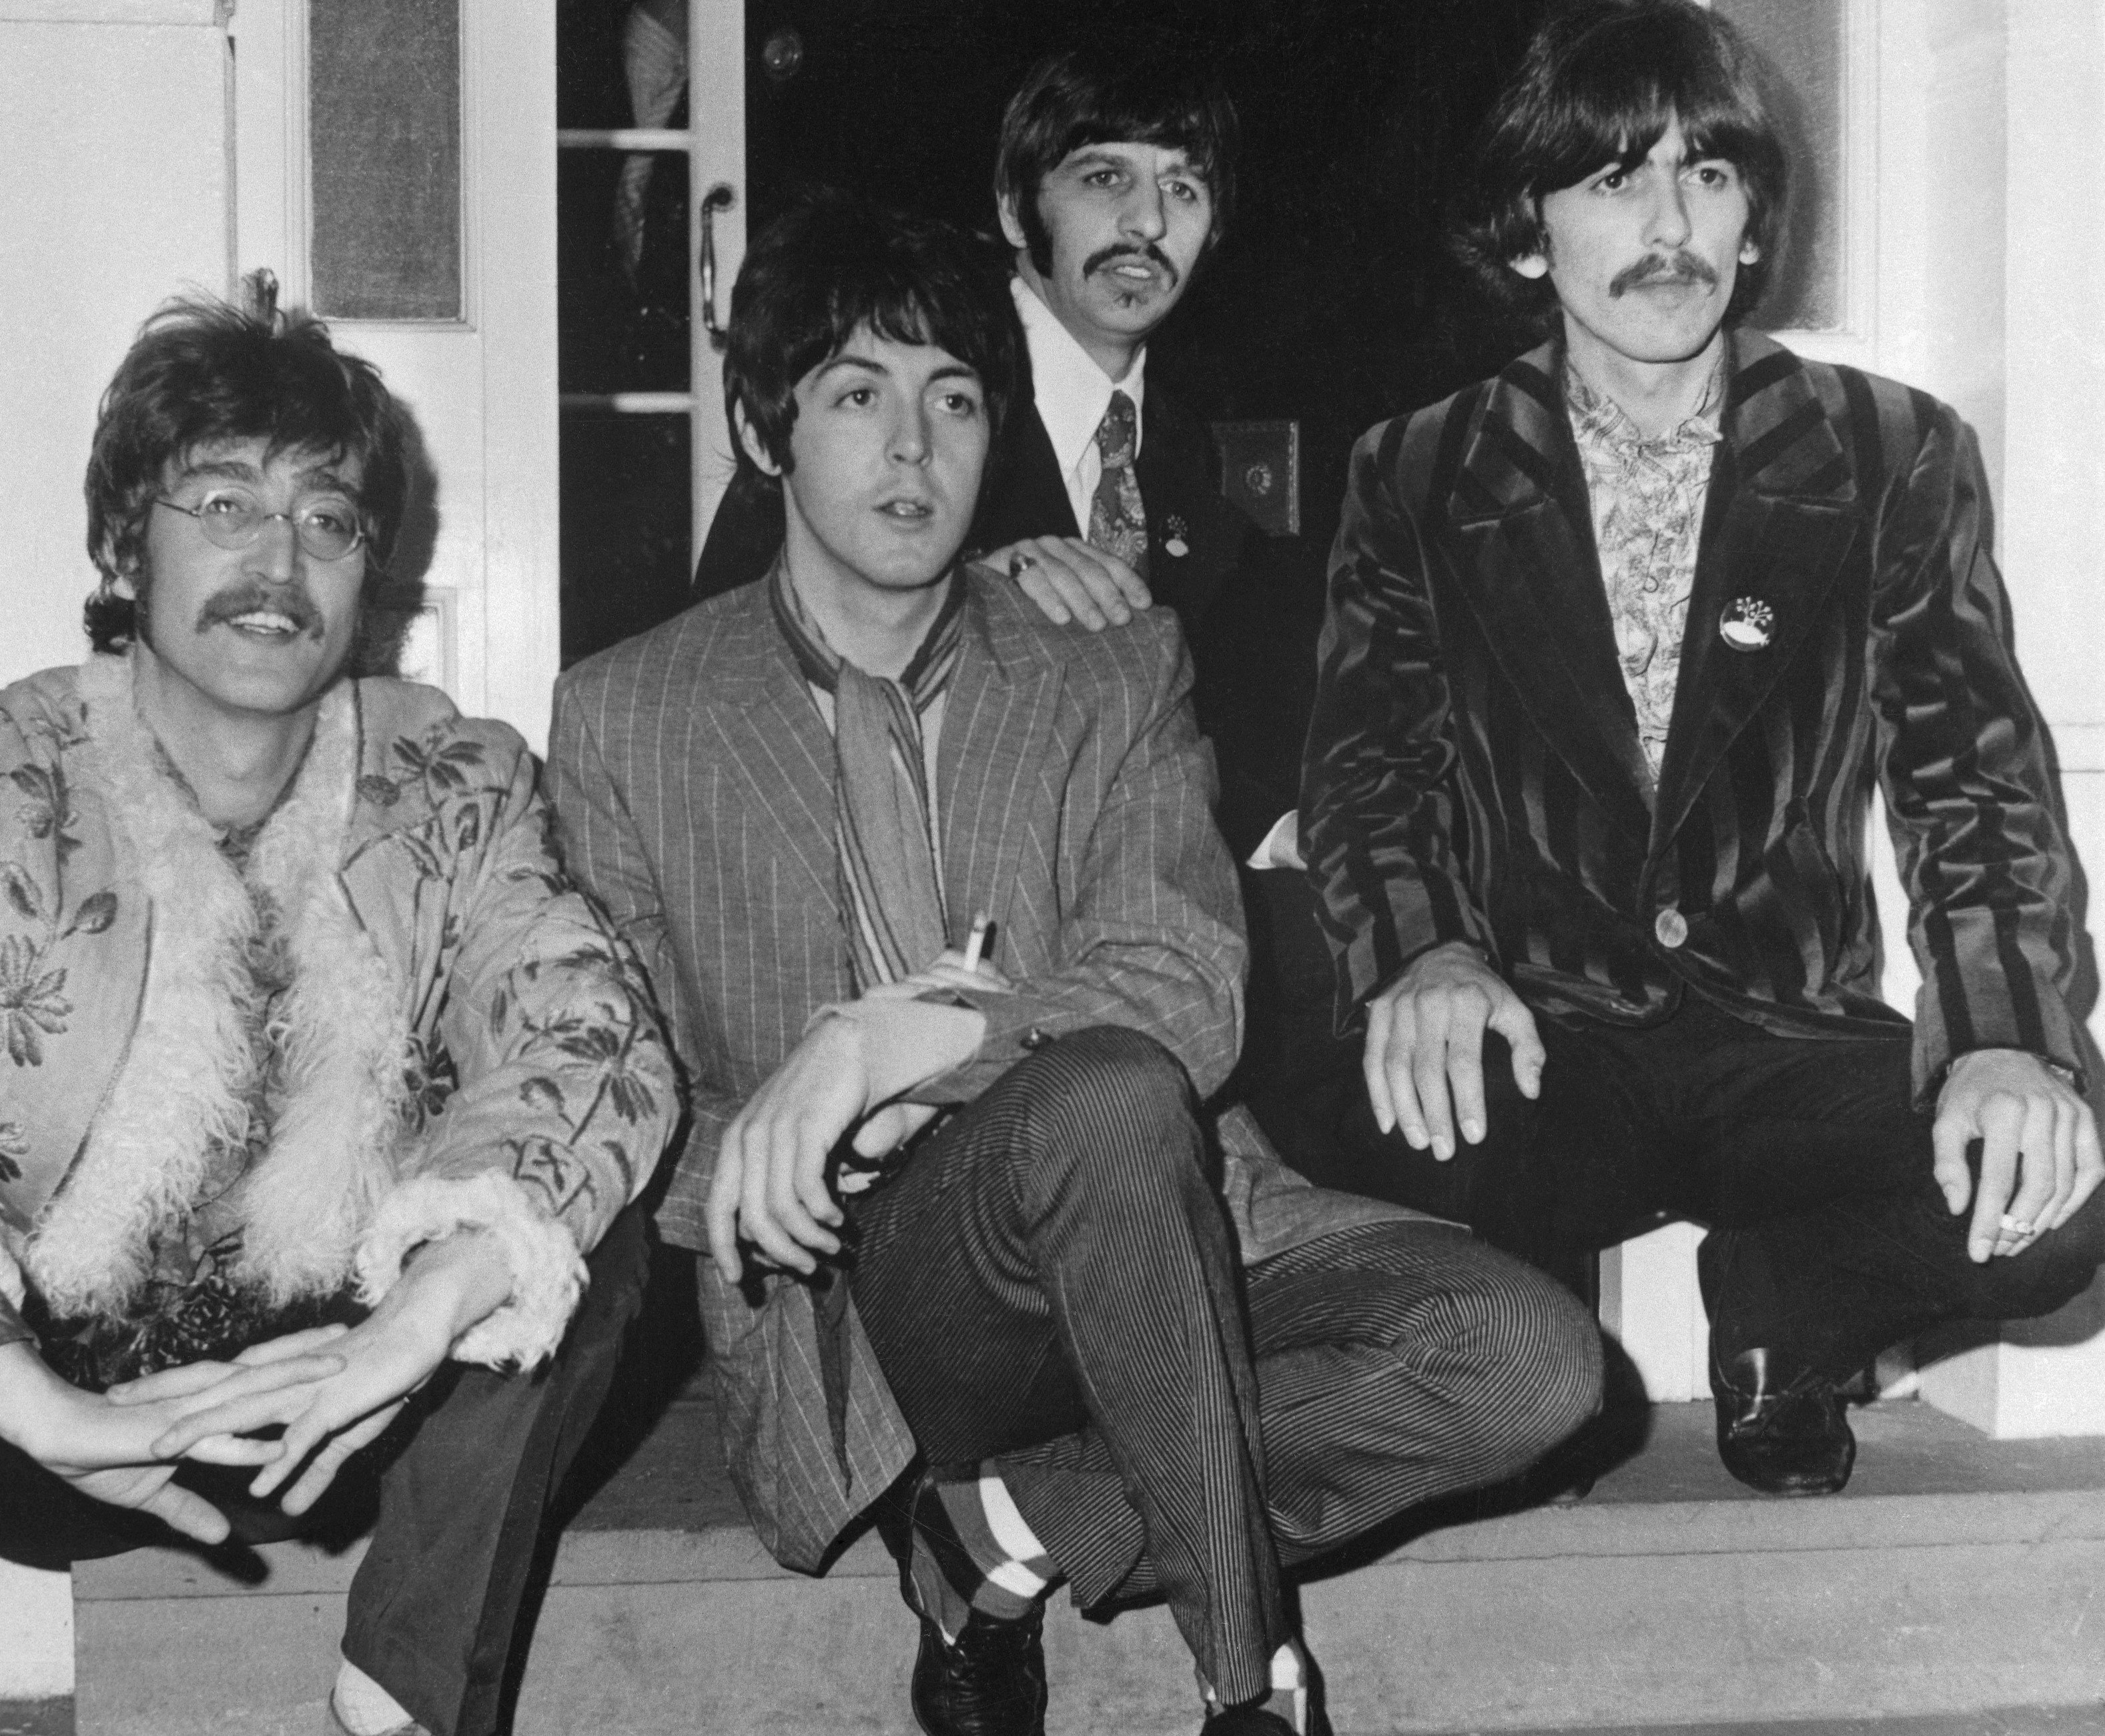 The Beatles' John Lennon, Paul McCartney, Ringo Starr, and George Harrison on a step during the "Get Back" era